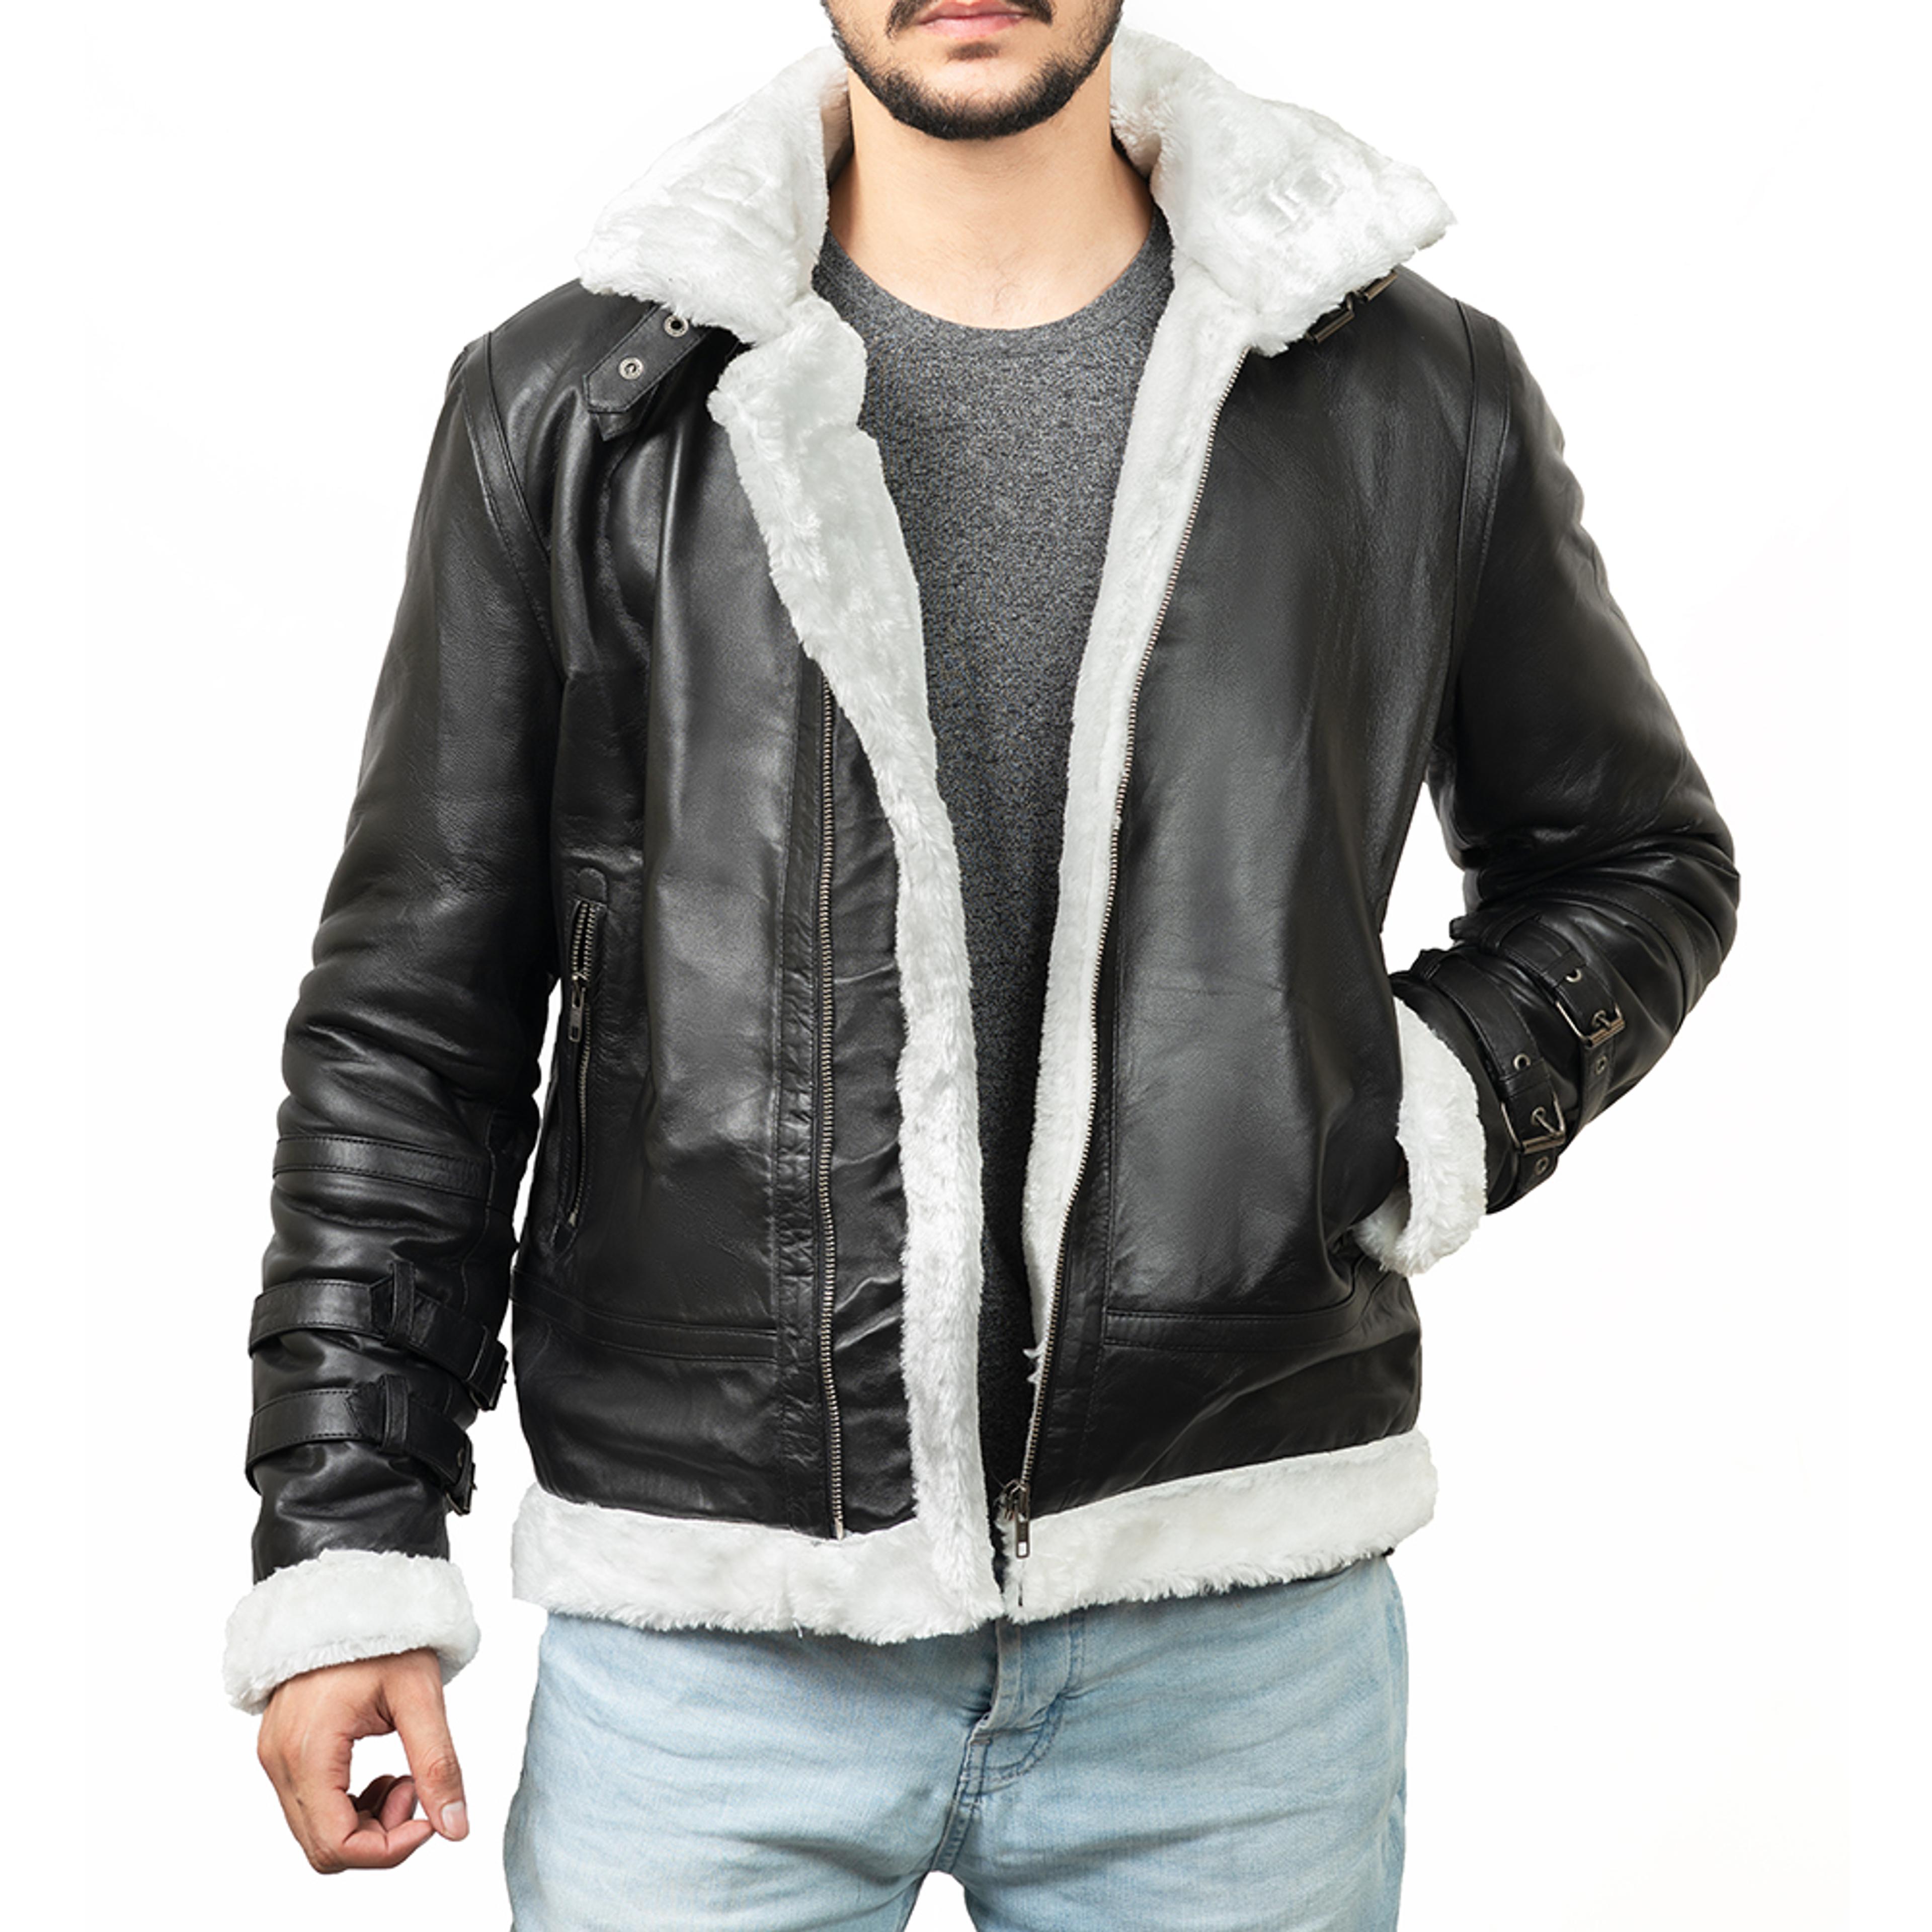 Leather Jacket Styles To Wear